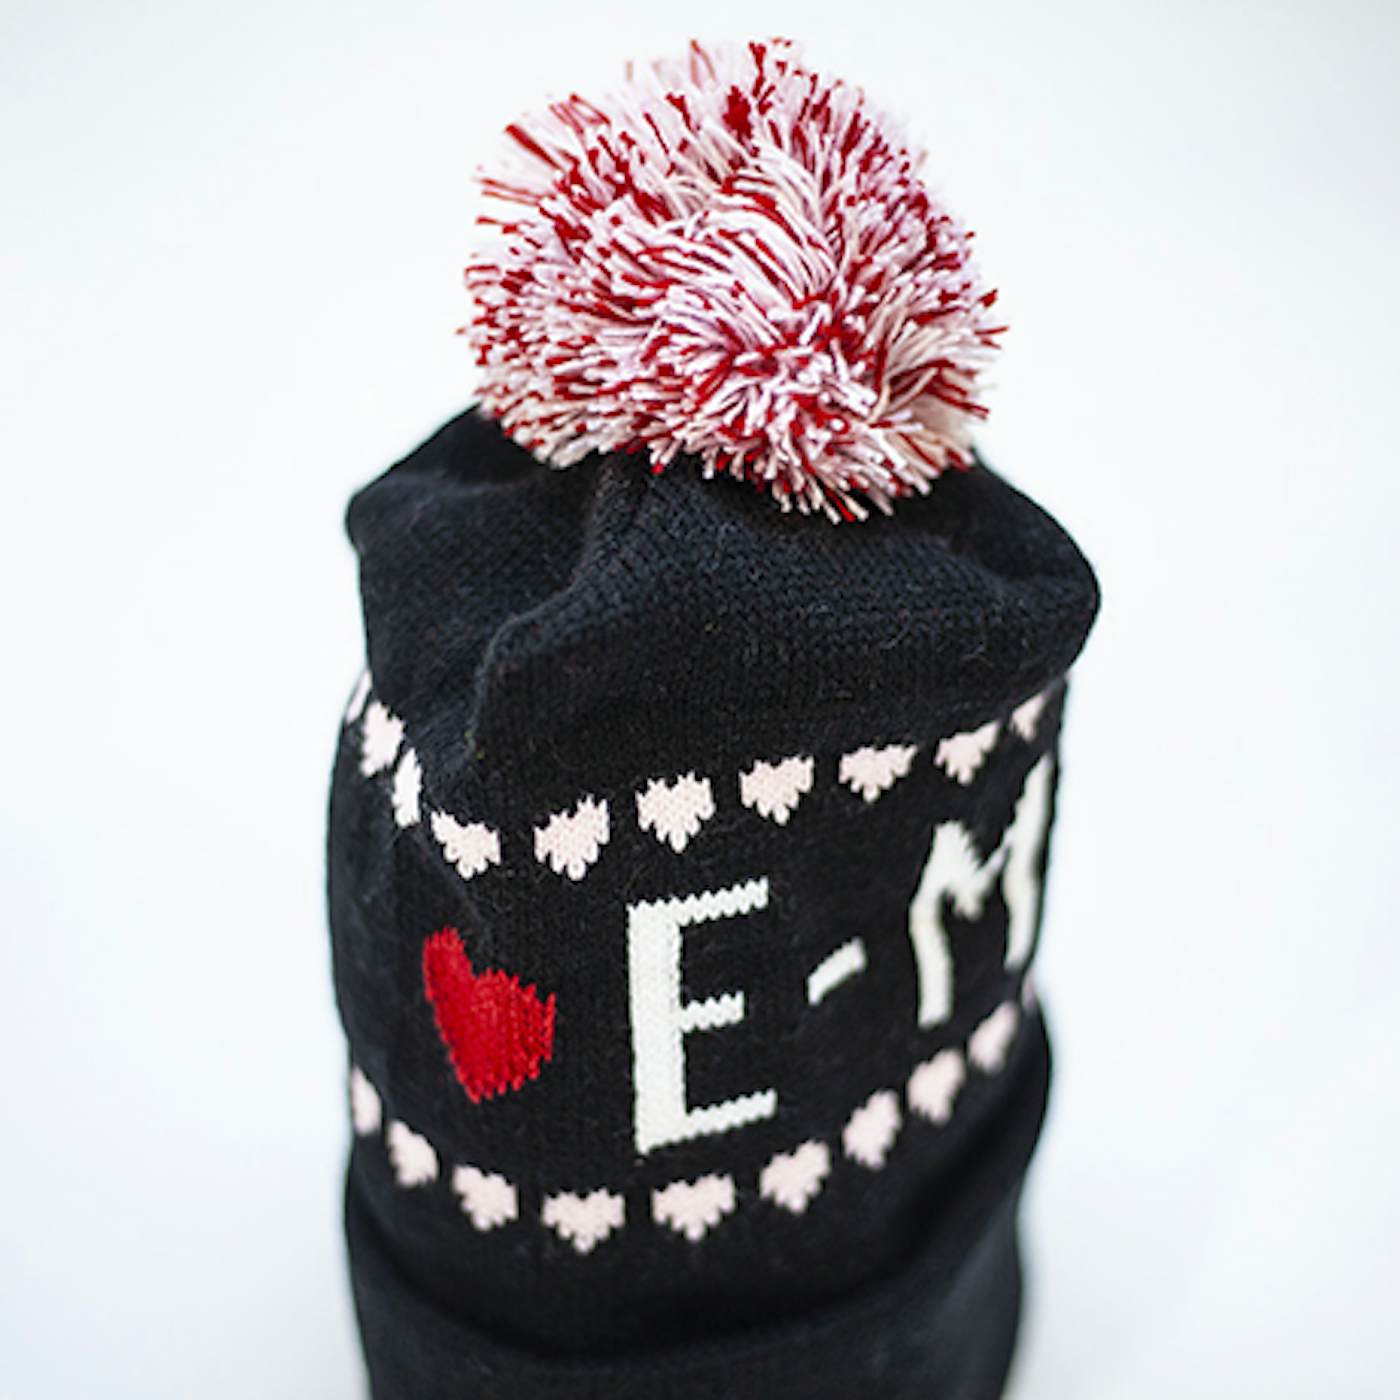 Antarctigo Vespucci E-Mail Knit Hat